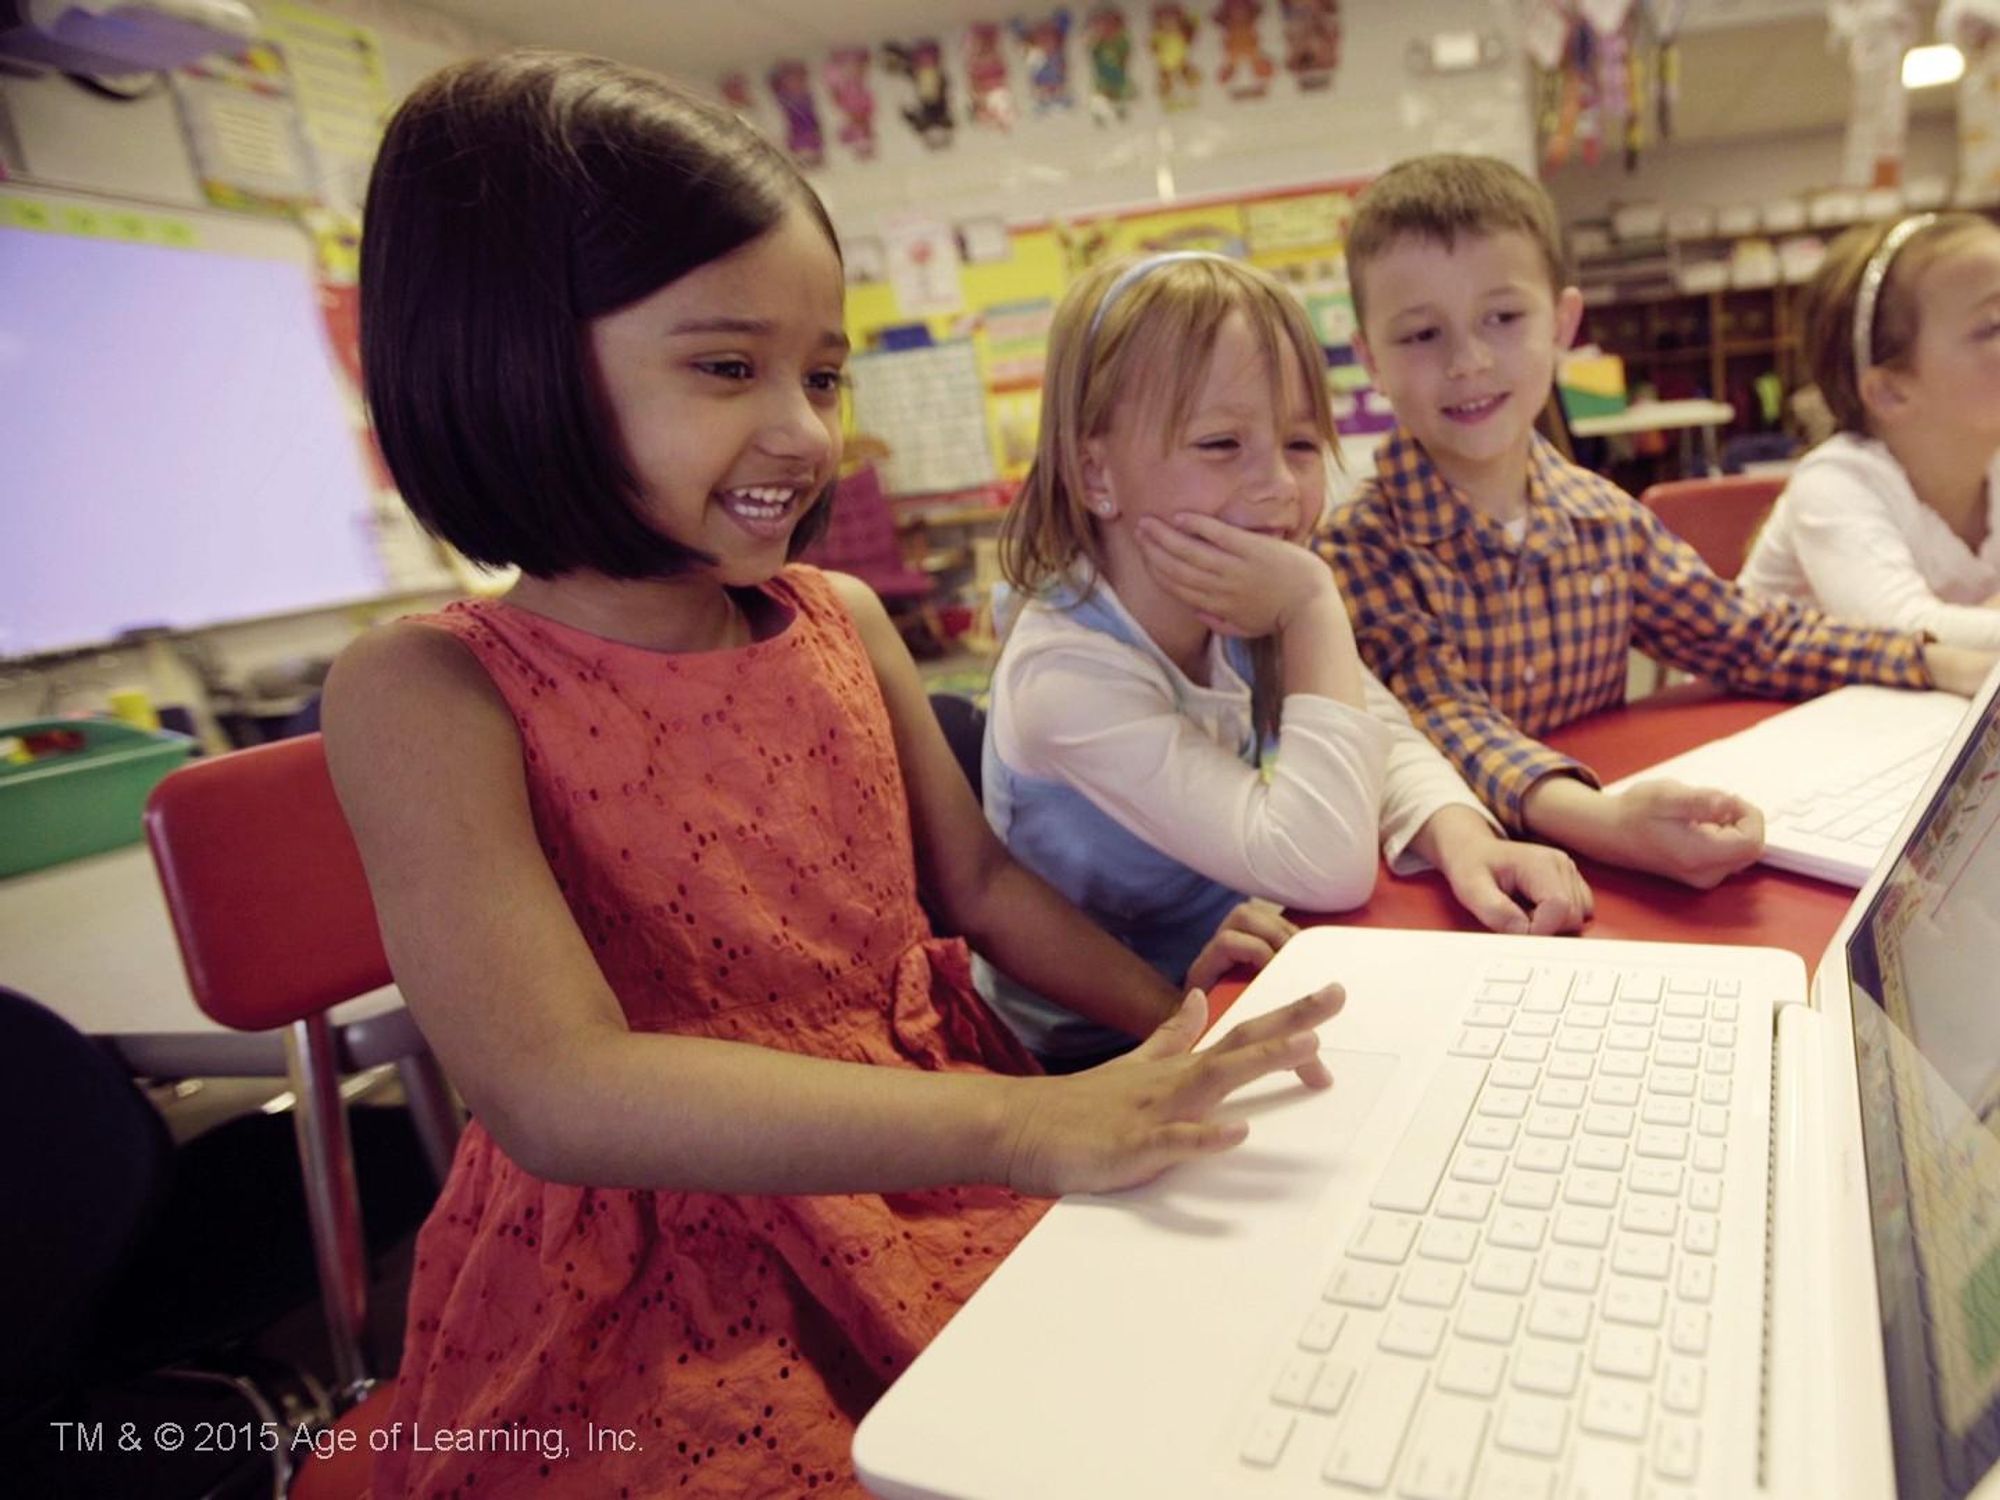 Tag / Ryan Free Activities online for kids in Kindergarten by